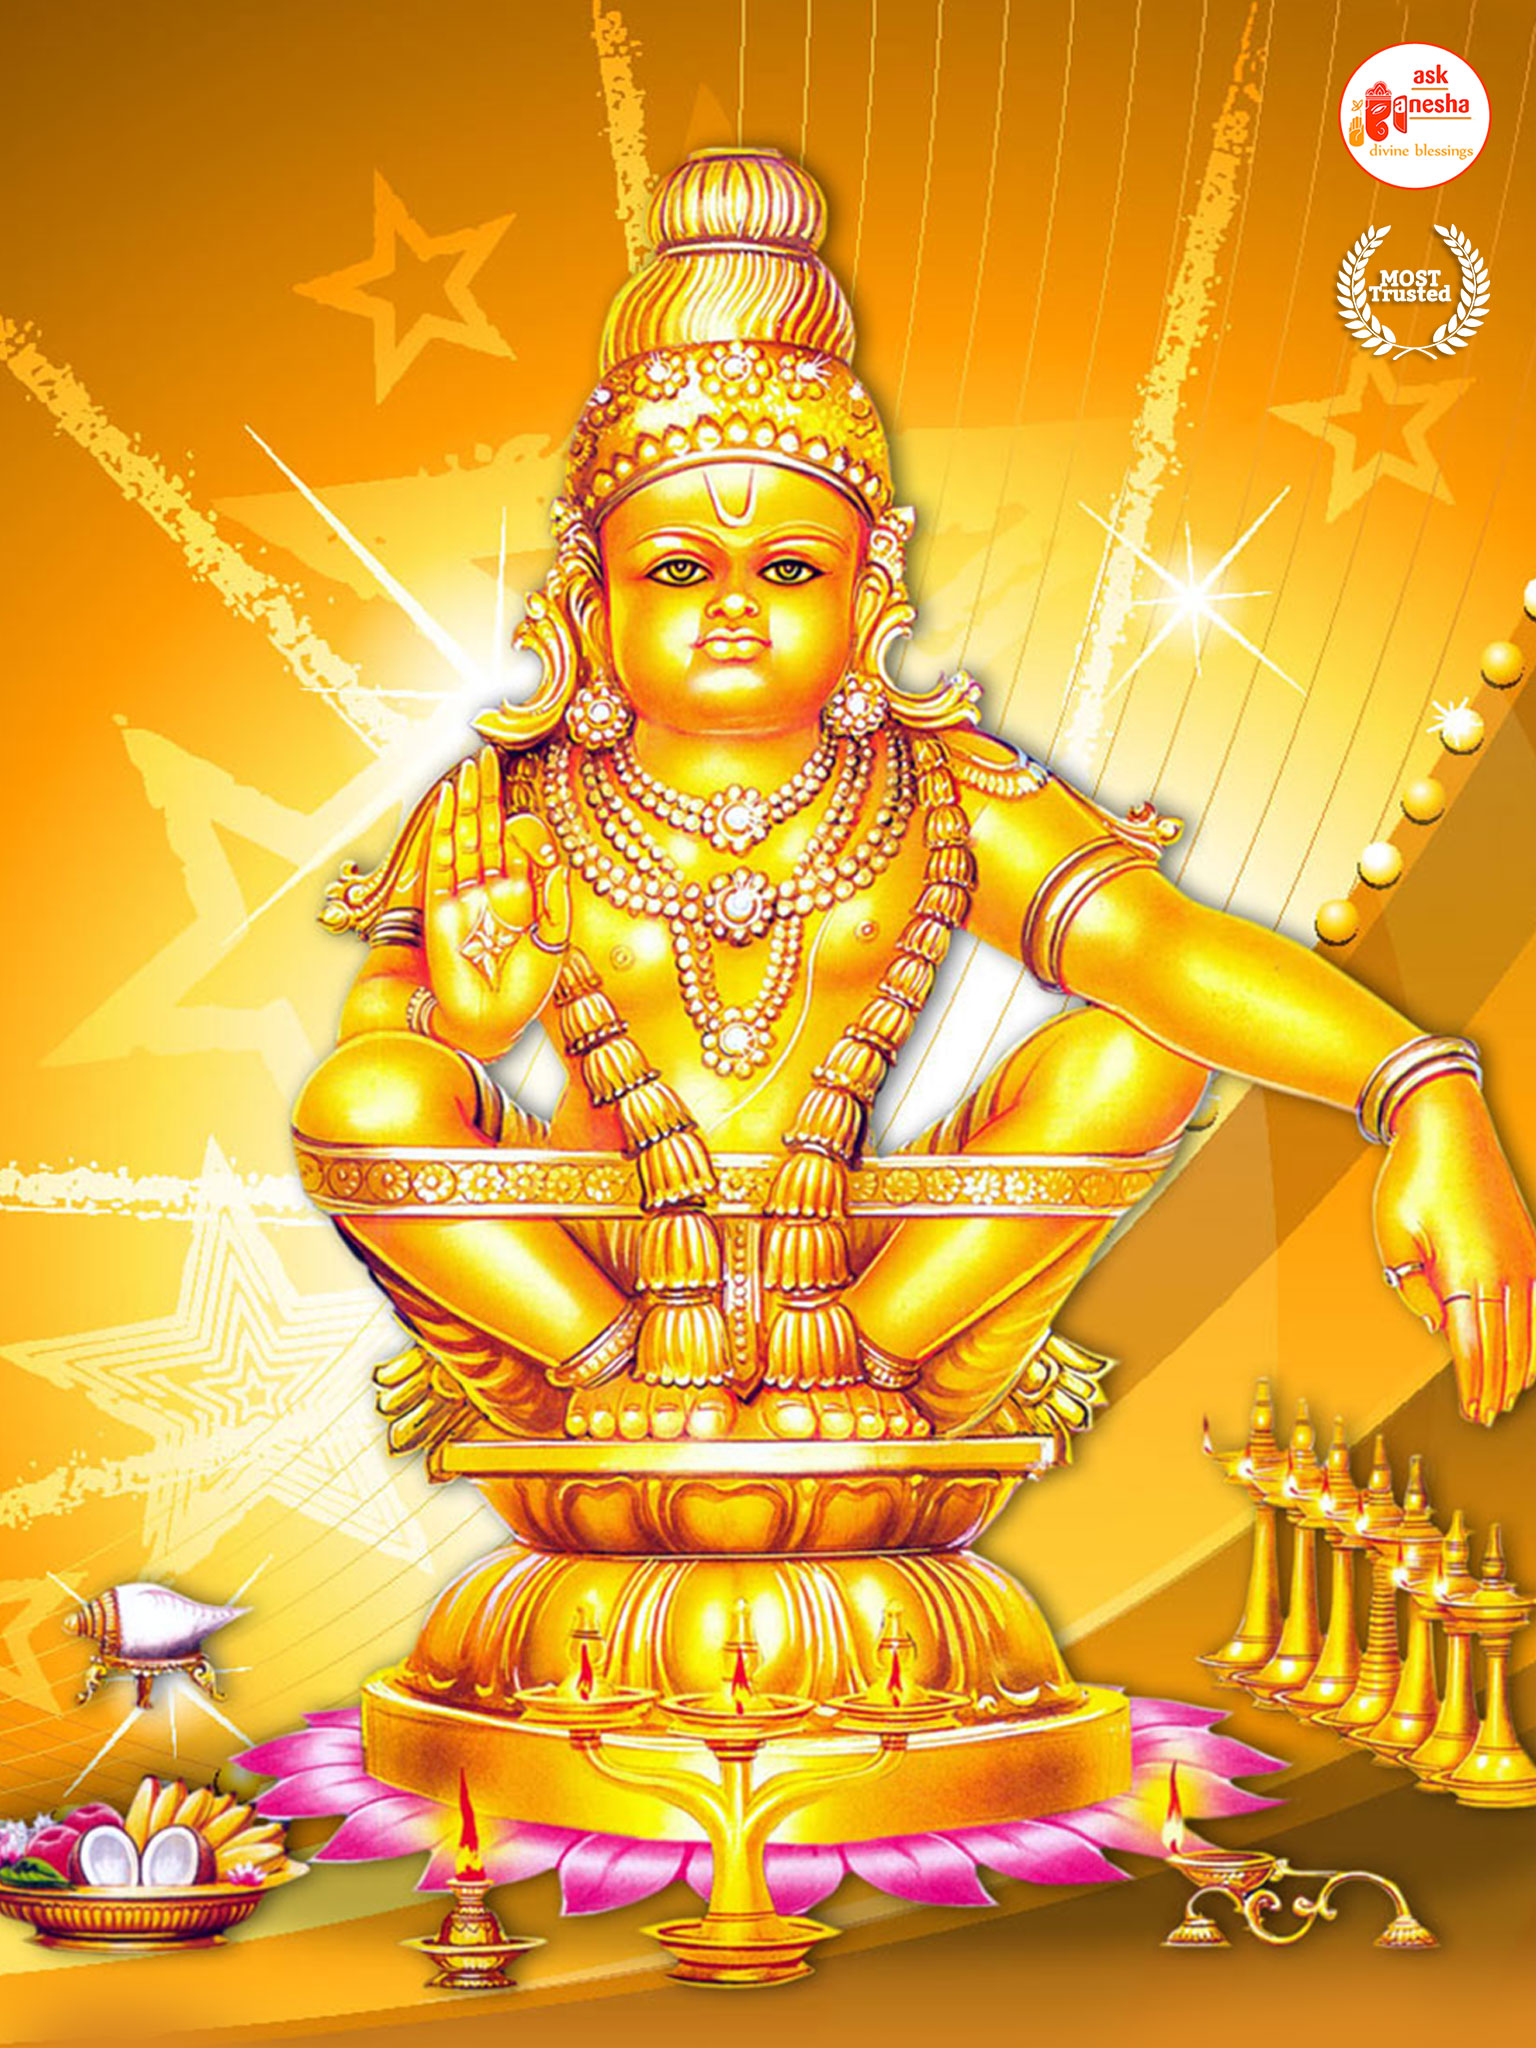 Lord Ayyappa Wallpapers [HD] | Download Free Images on Askganesha